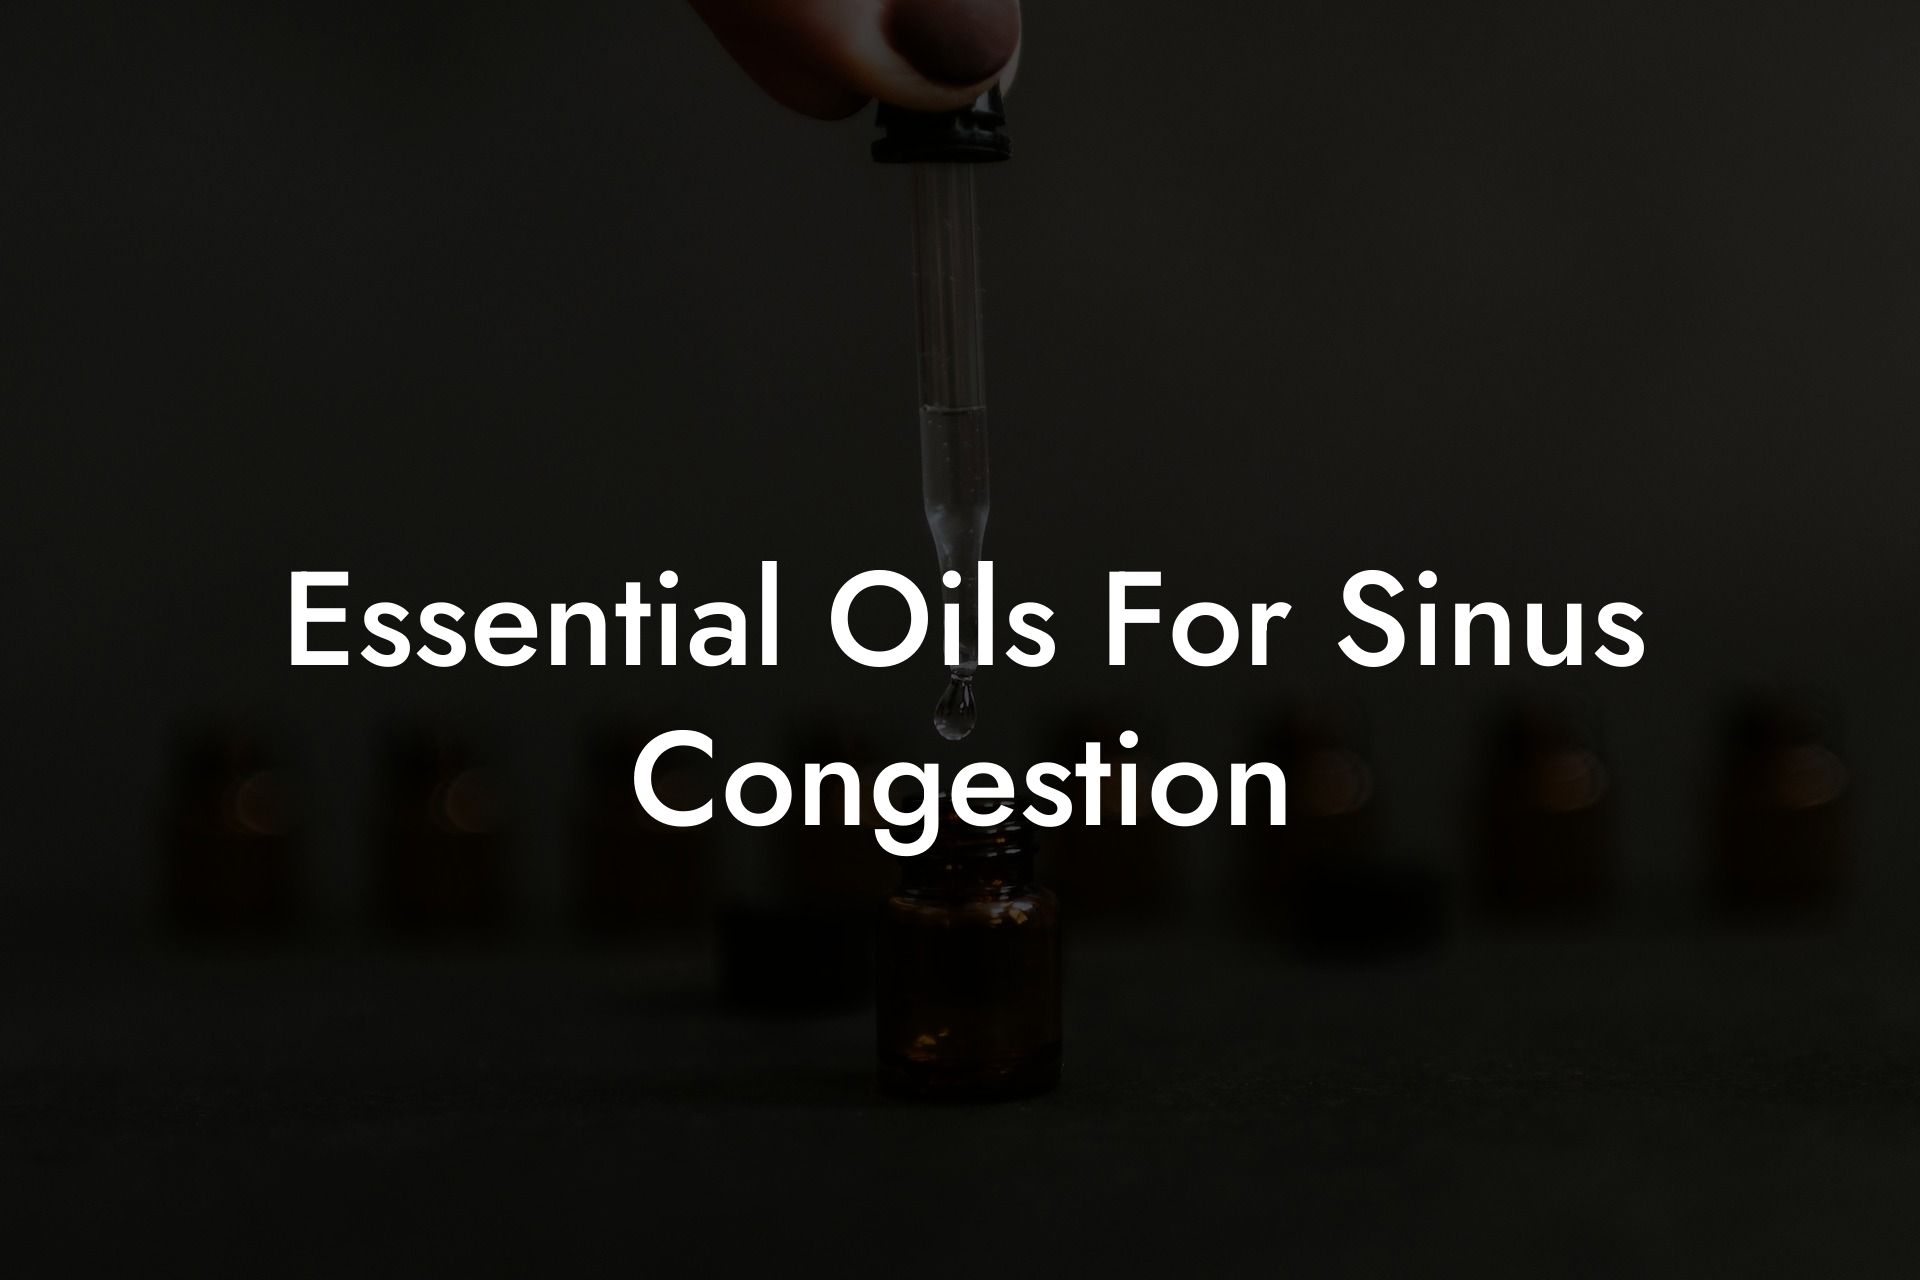 Essential Oils For Sinus Congestion